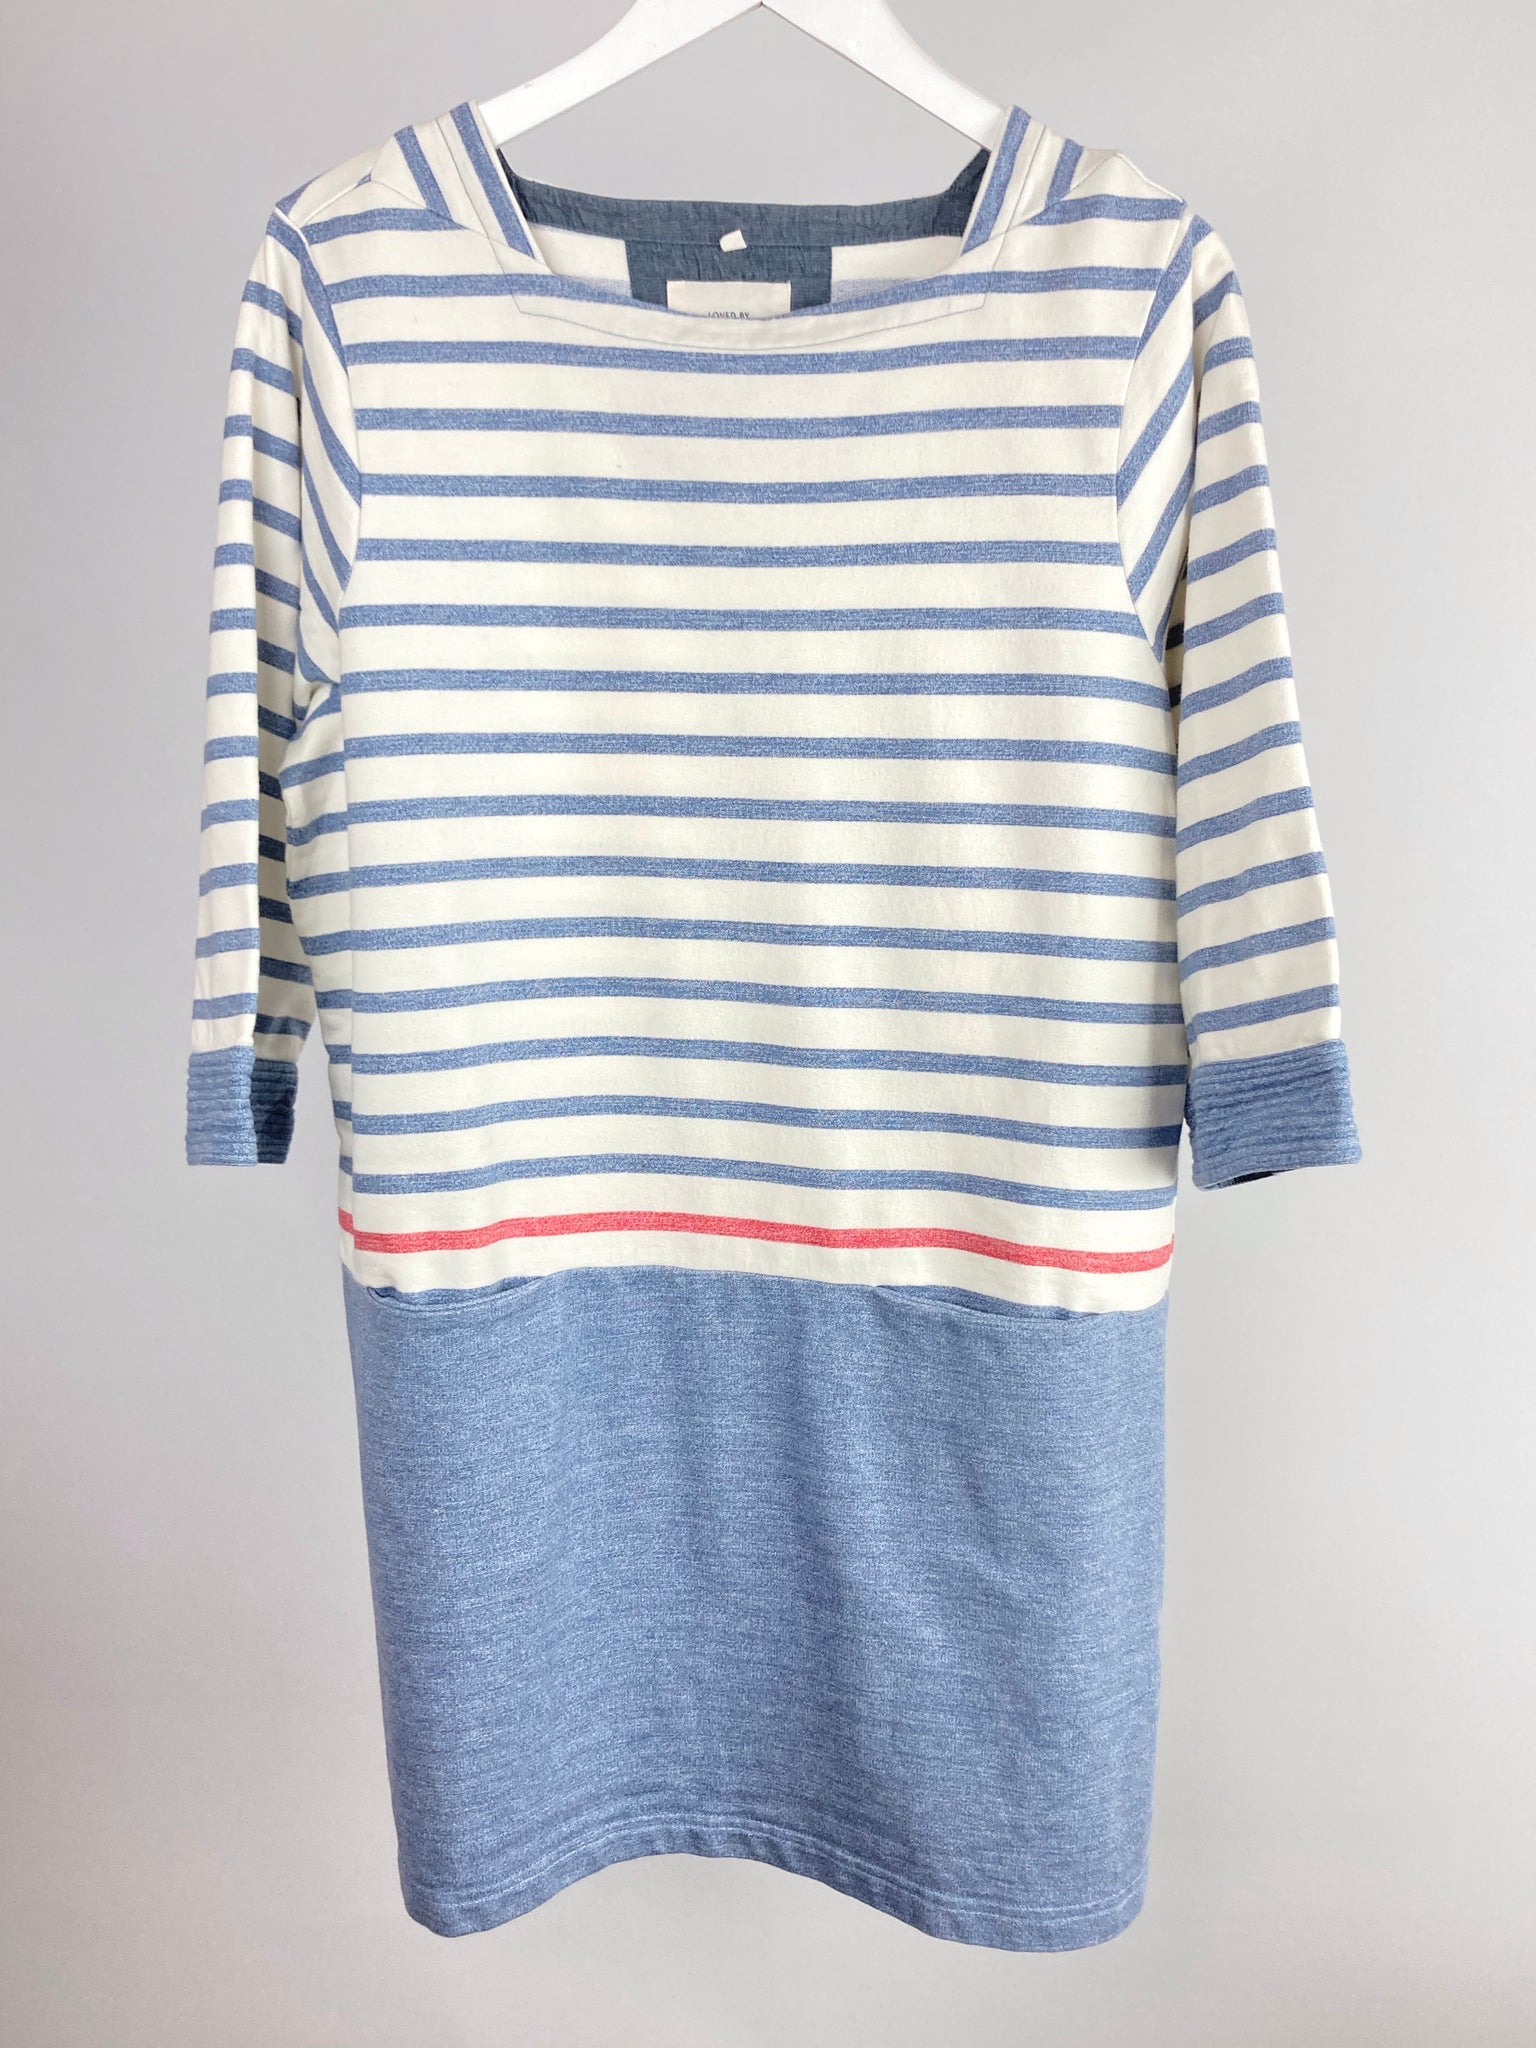 Sea salt stripe cotton tunic size uk16